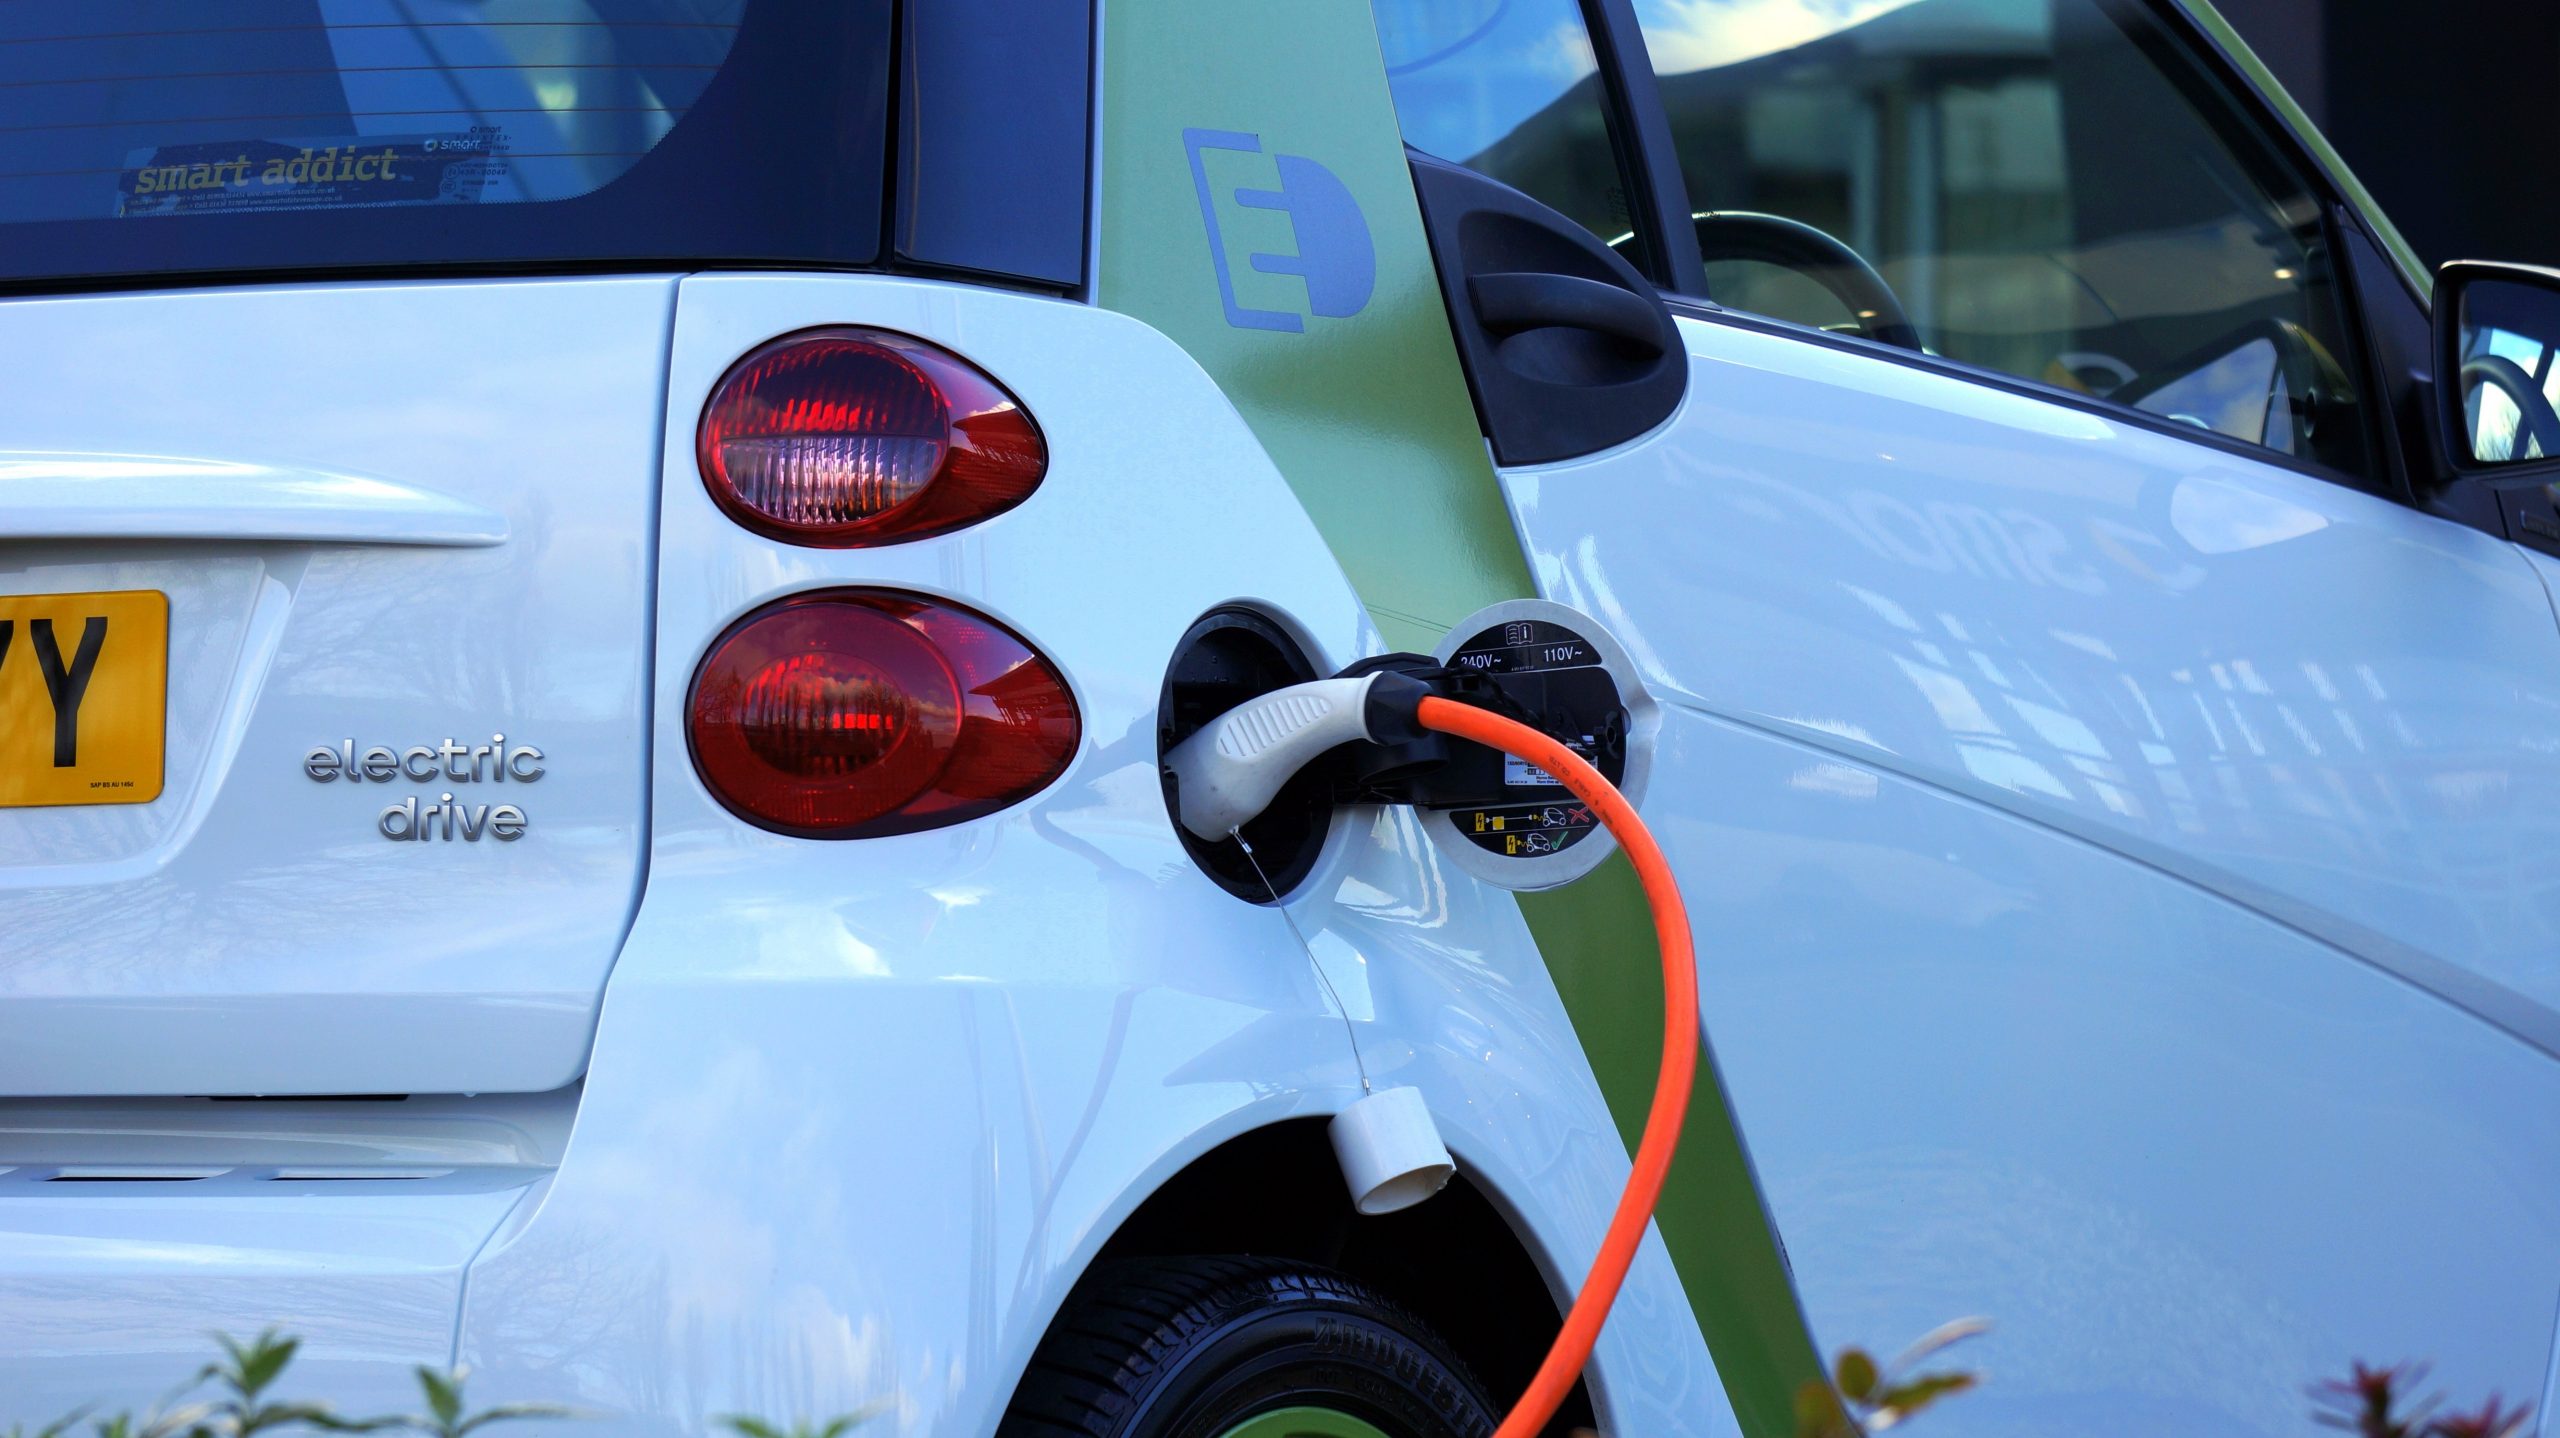 Electric Vehicles create jobs